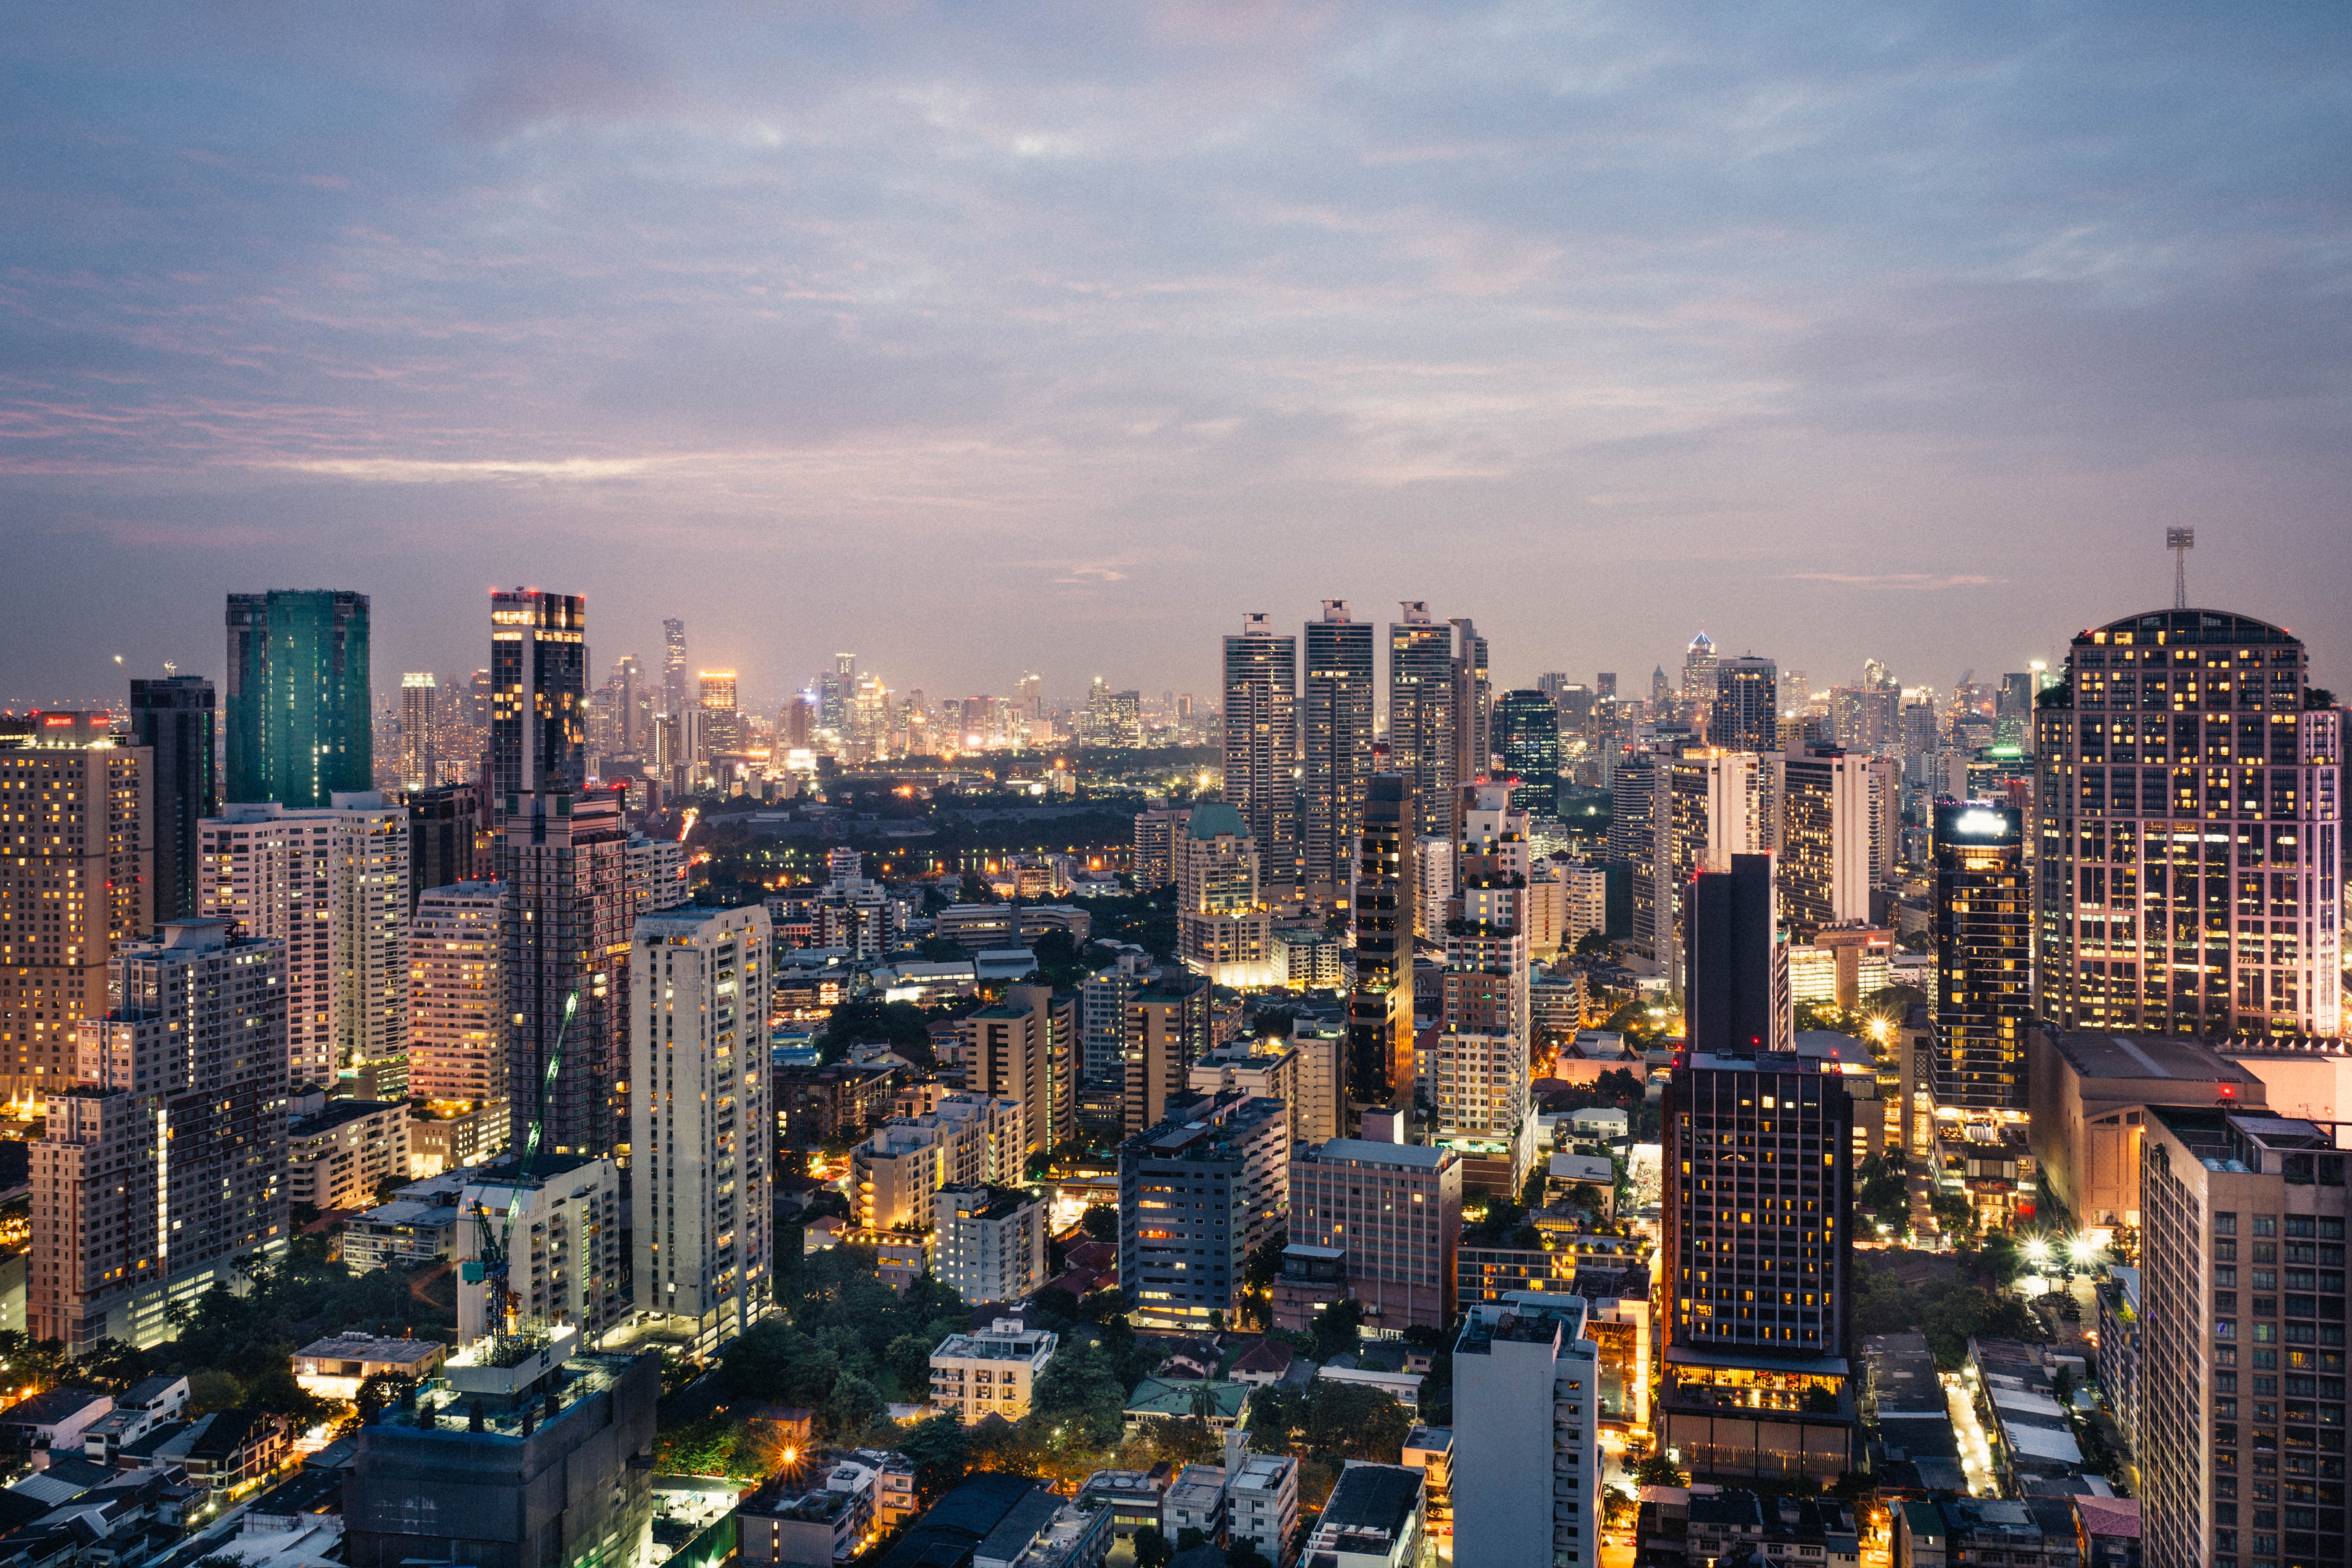 The lights of the city of Bangkok from above at nightfall